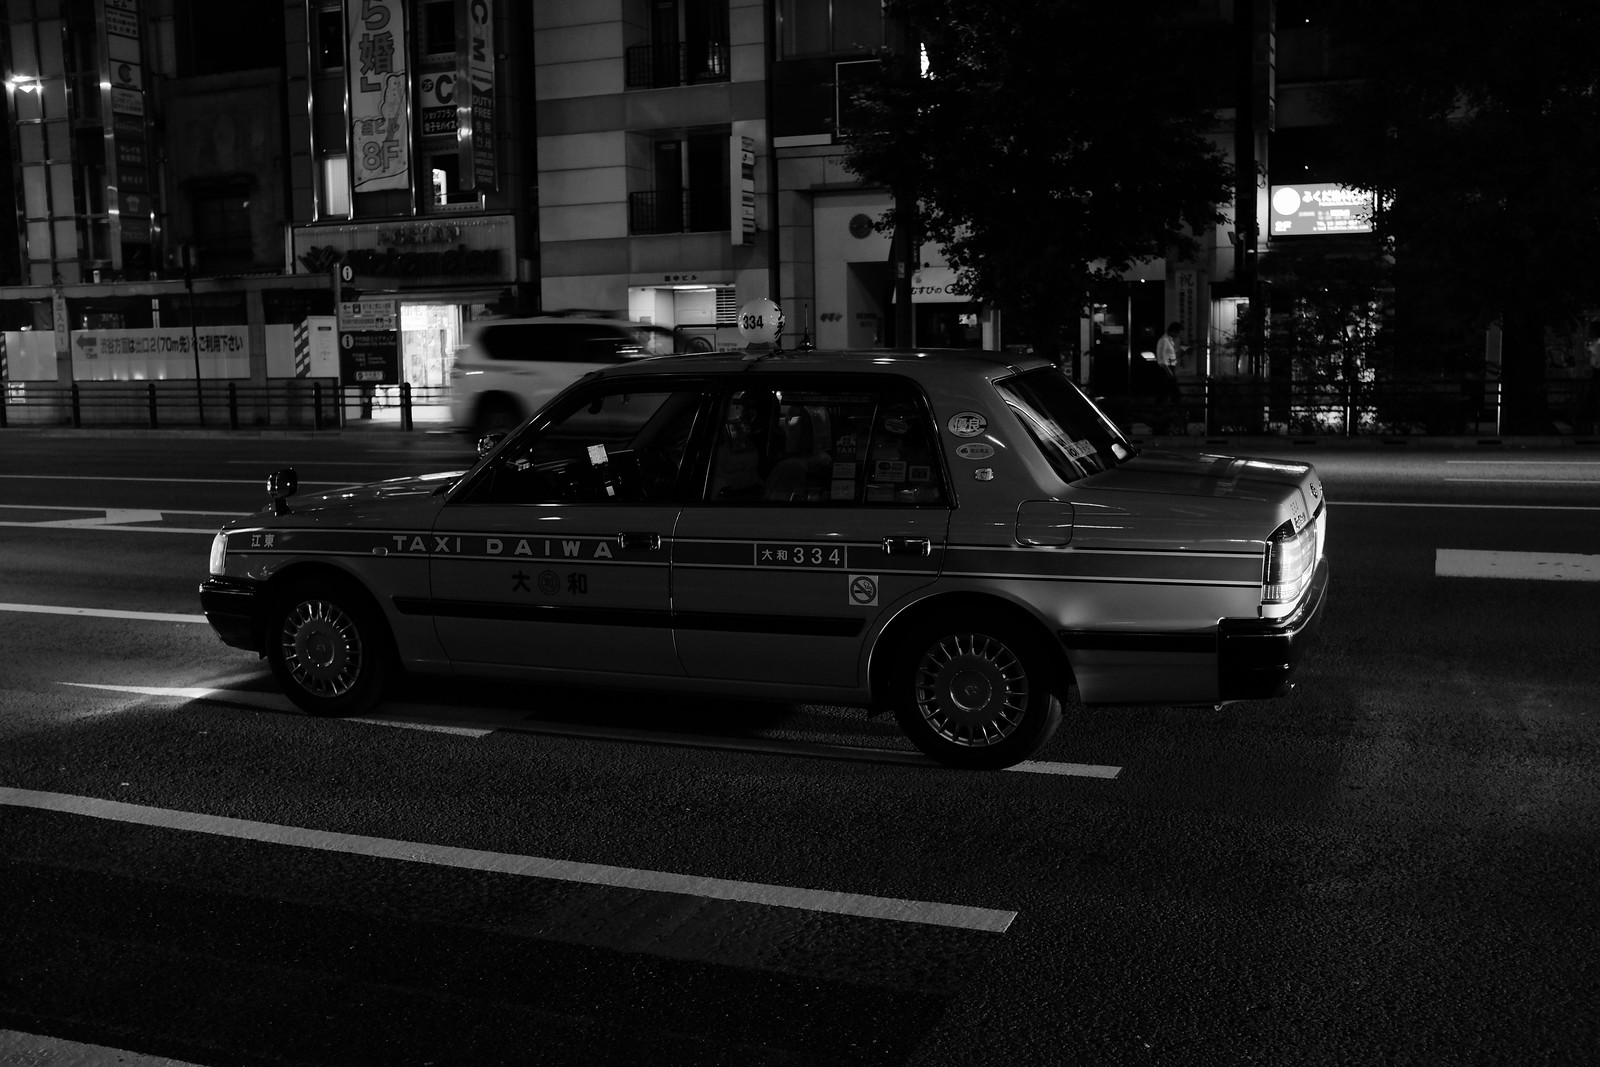 The Akihabara taken by FUJIFILM X100S.